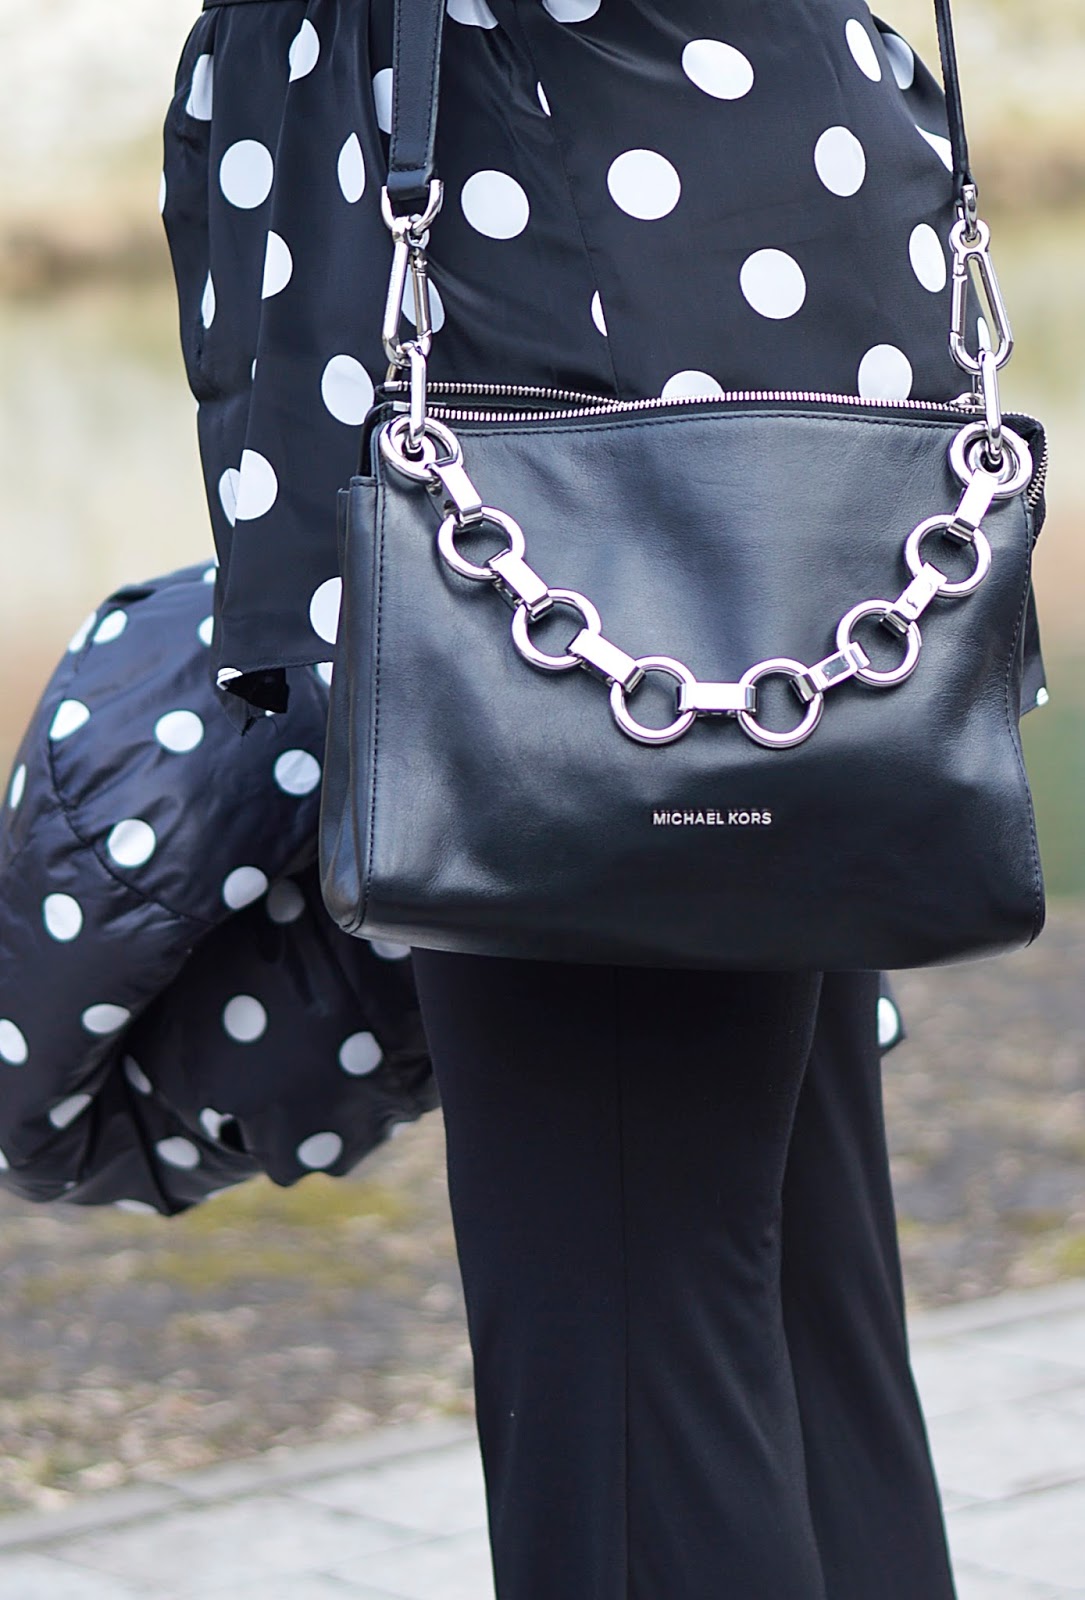 Michael Kors bag, polka dots, black and white style